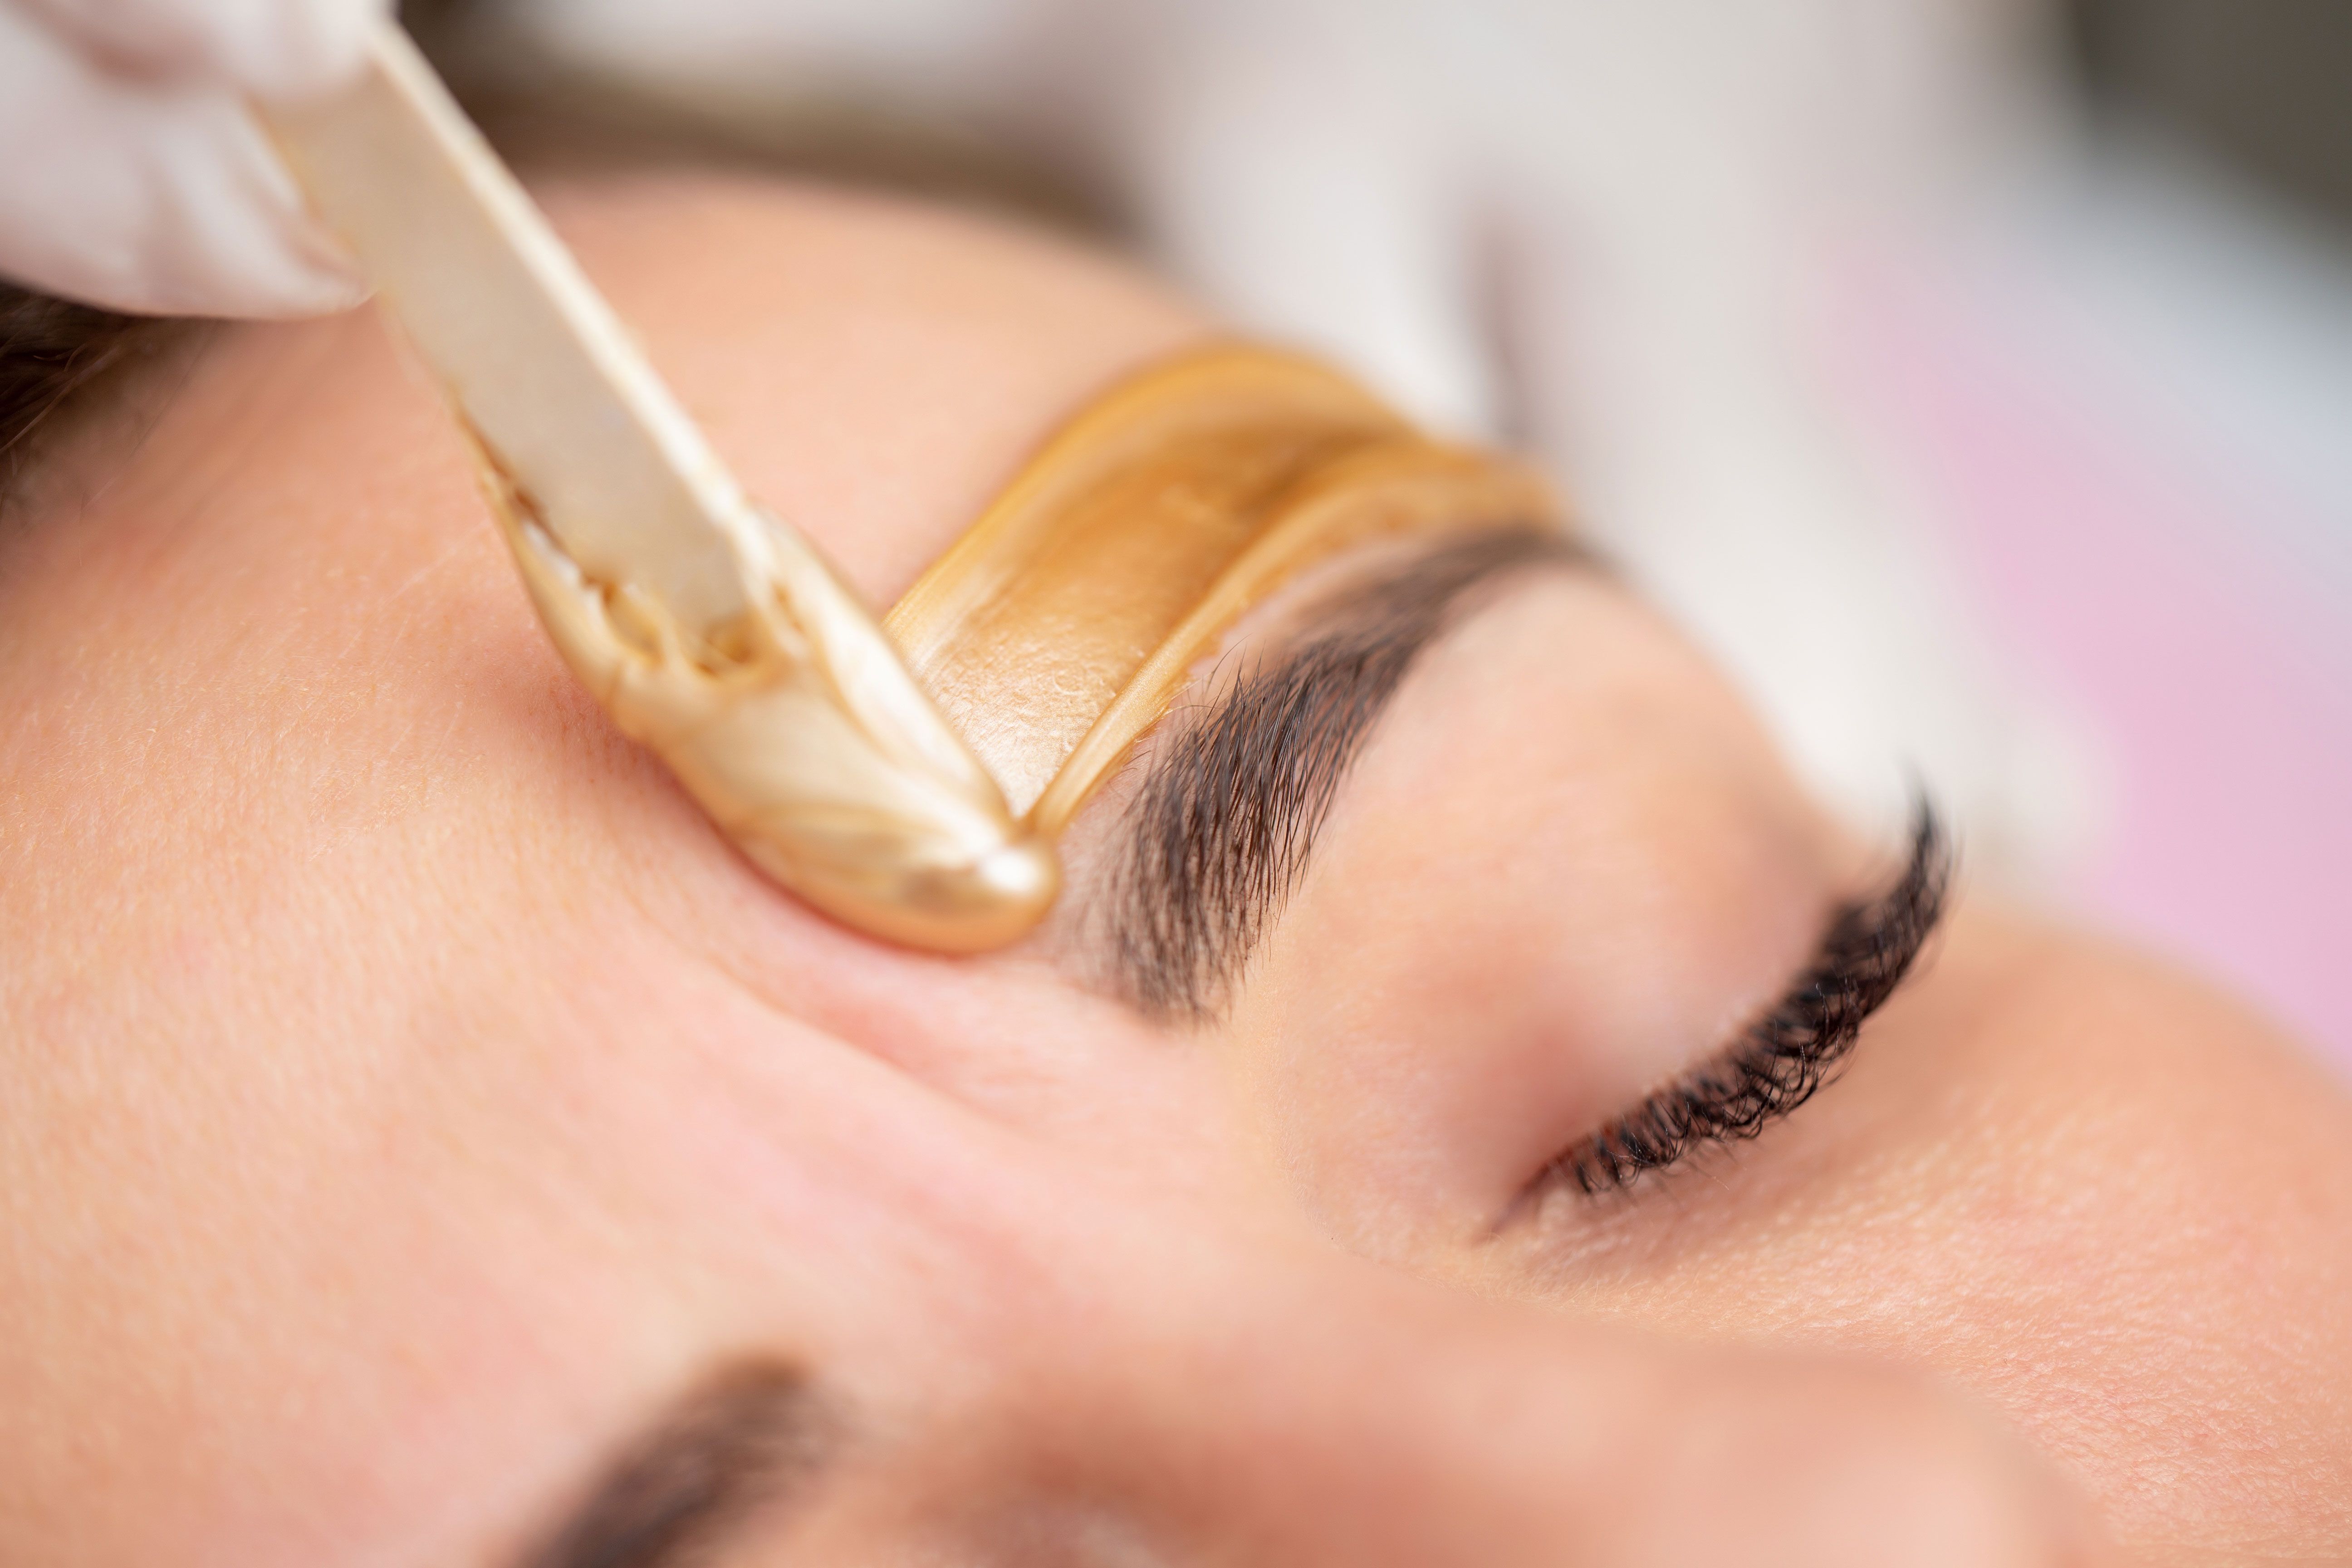 10 Best Facial Hair Removal Methods for Women